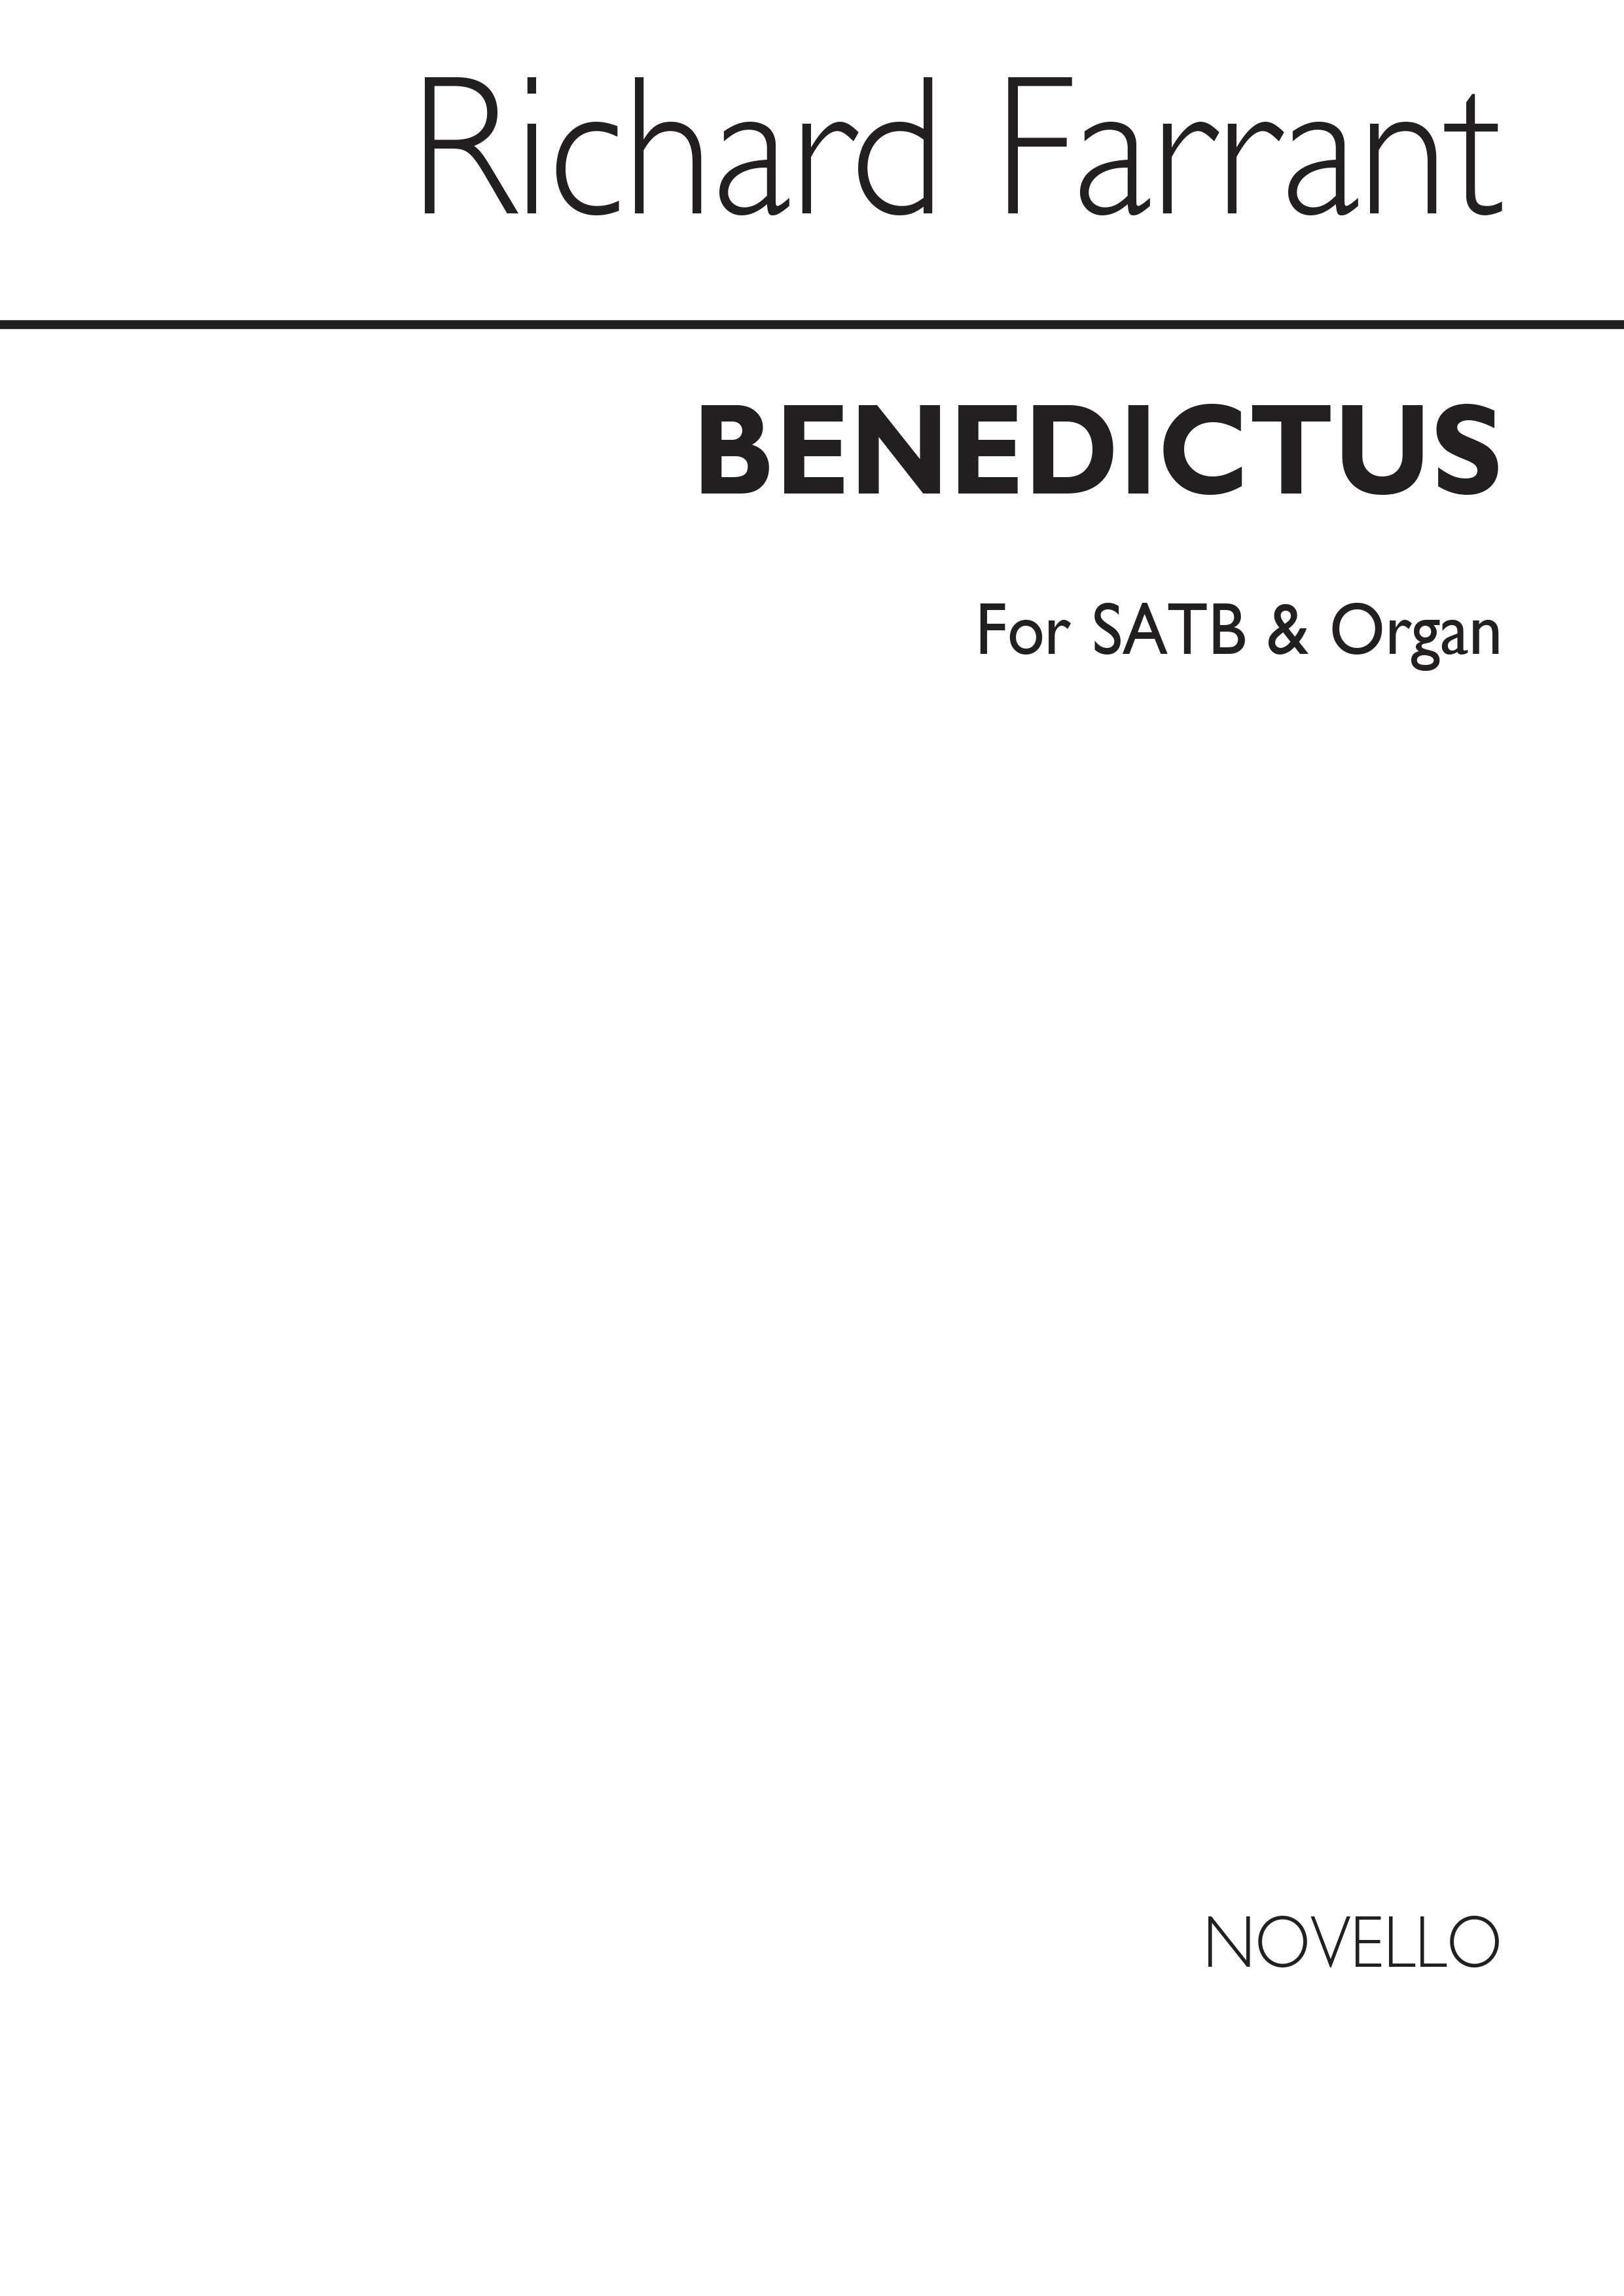 Richard Farrant: Benedictus In G Minor Satb/Organ (Edited By John E West)